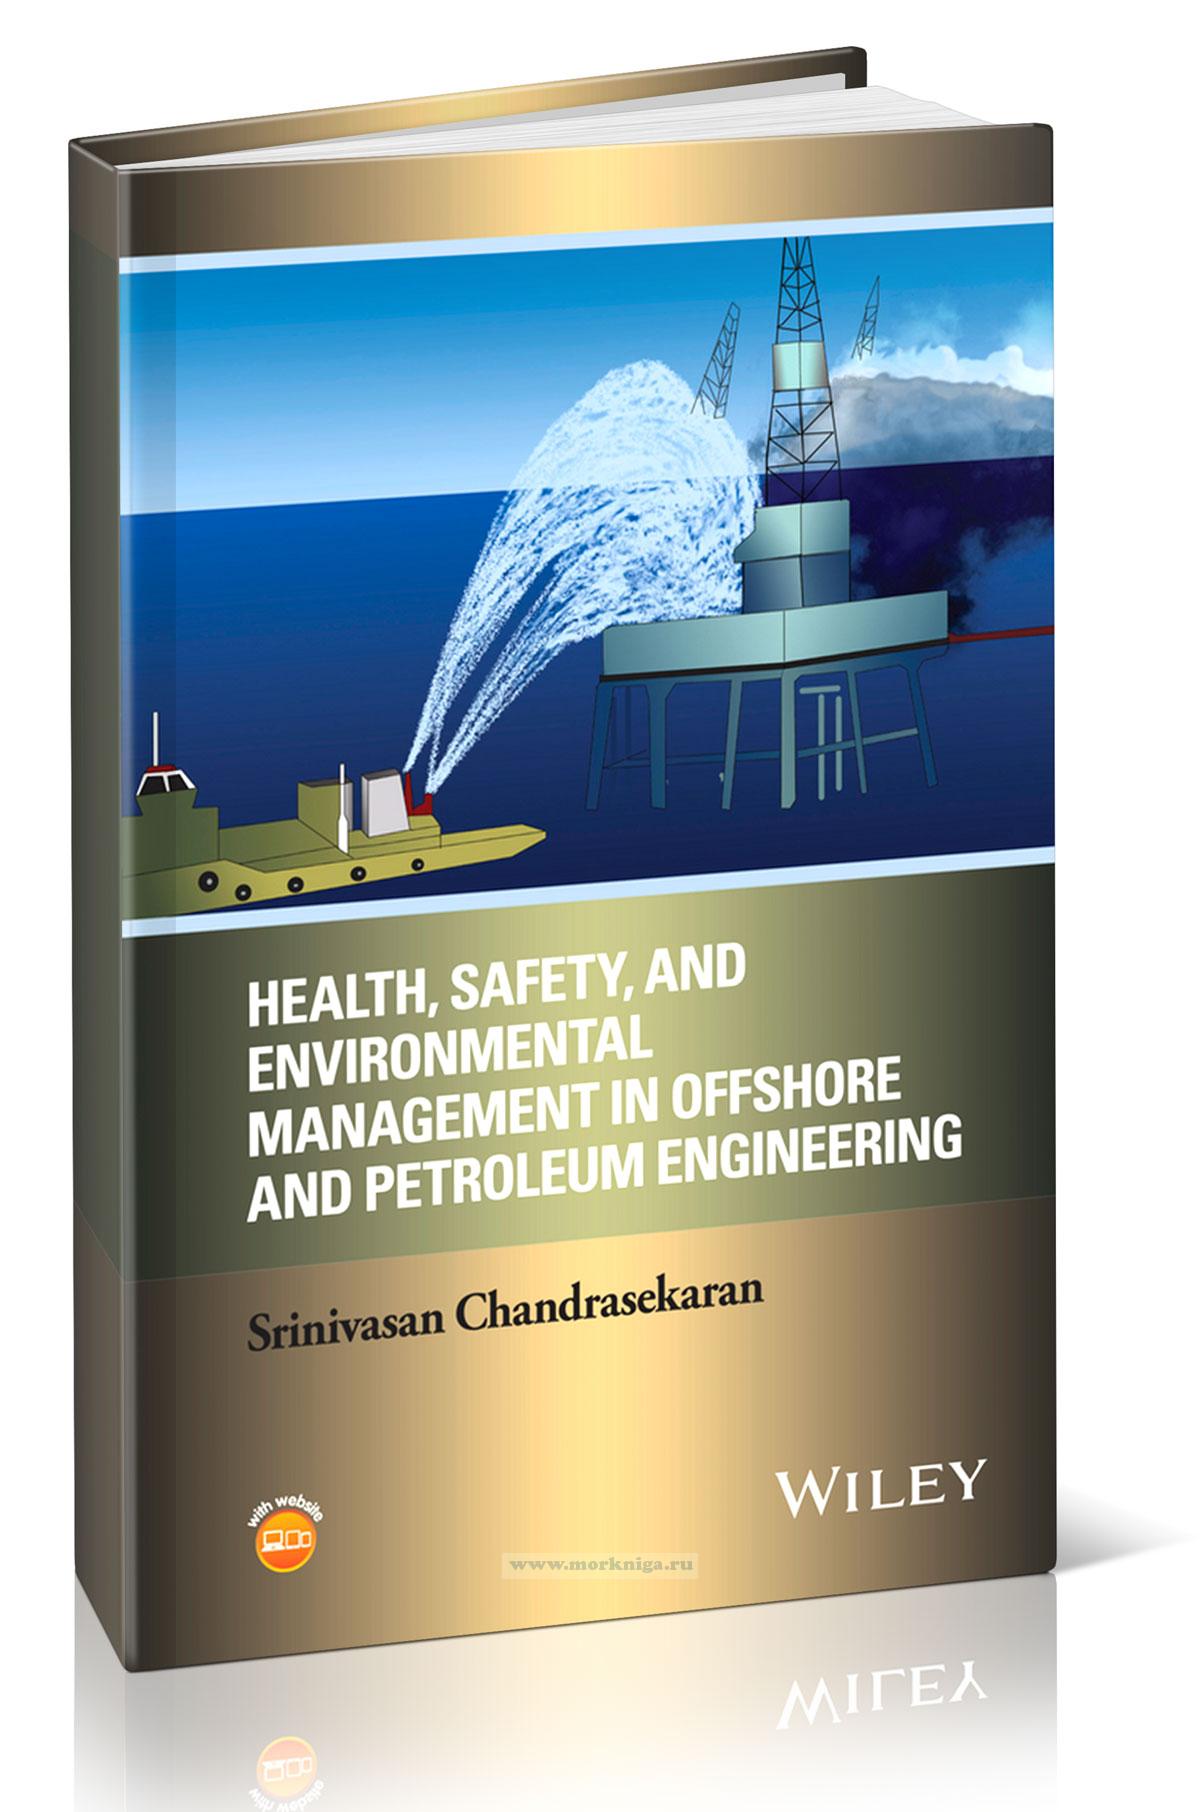 Health, safety, and environmental management in offshore and petroleum engineering/Охрана труда, техника безопасности и экологический менеджмент в морском и нефтяном машиностроении